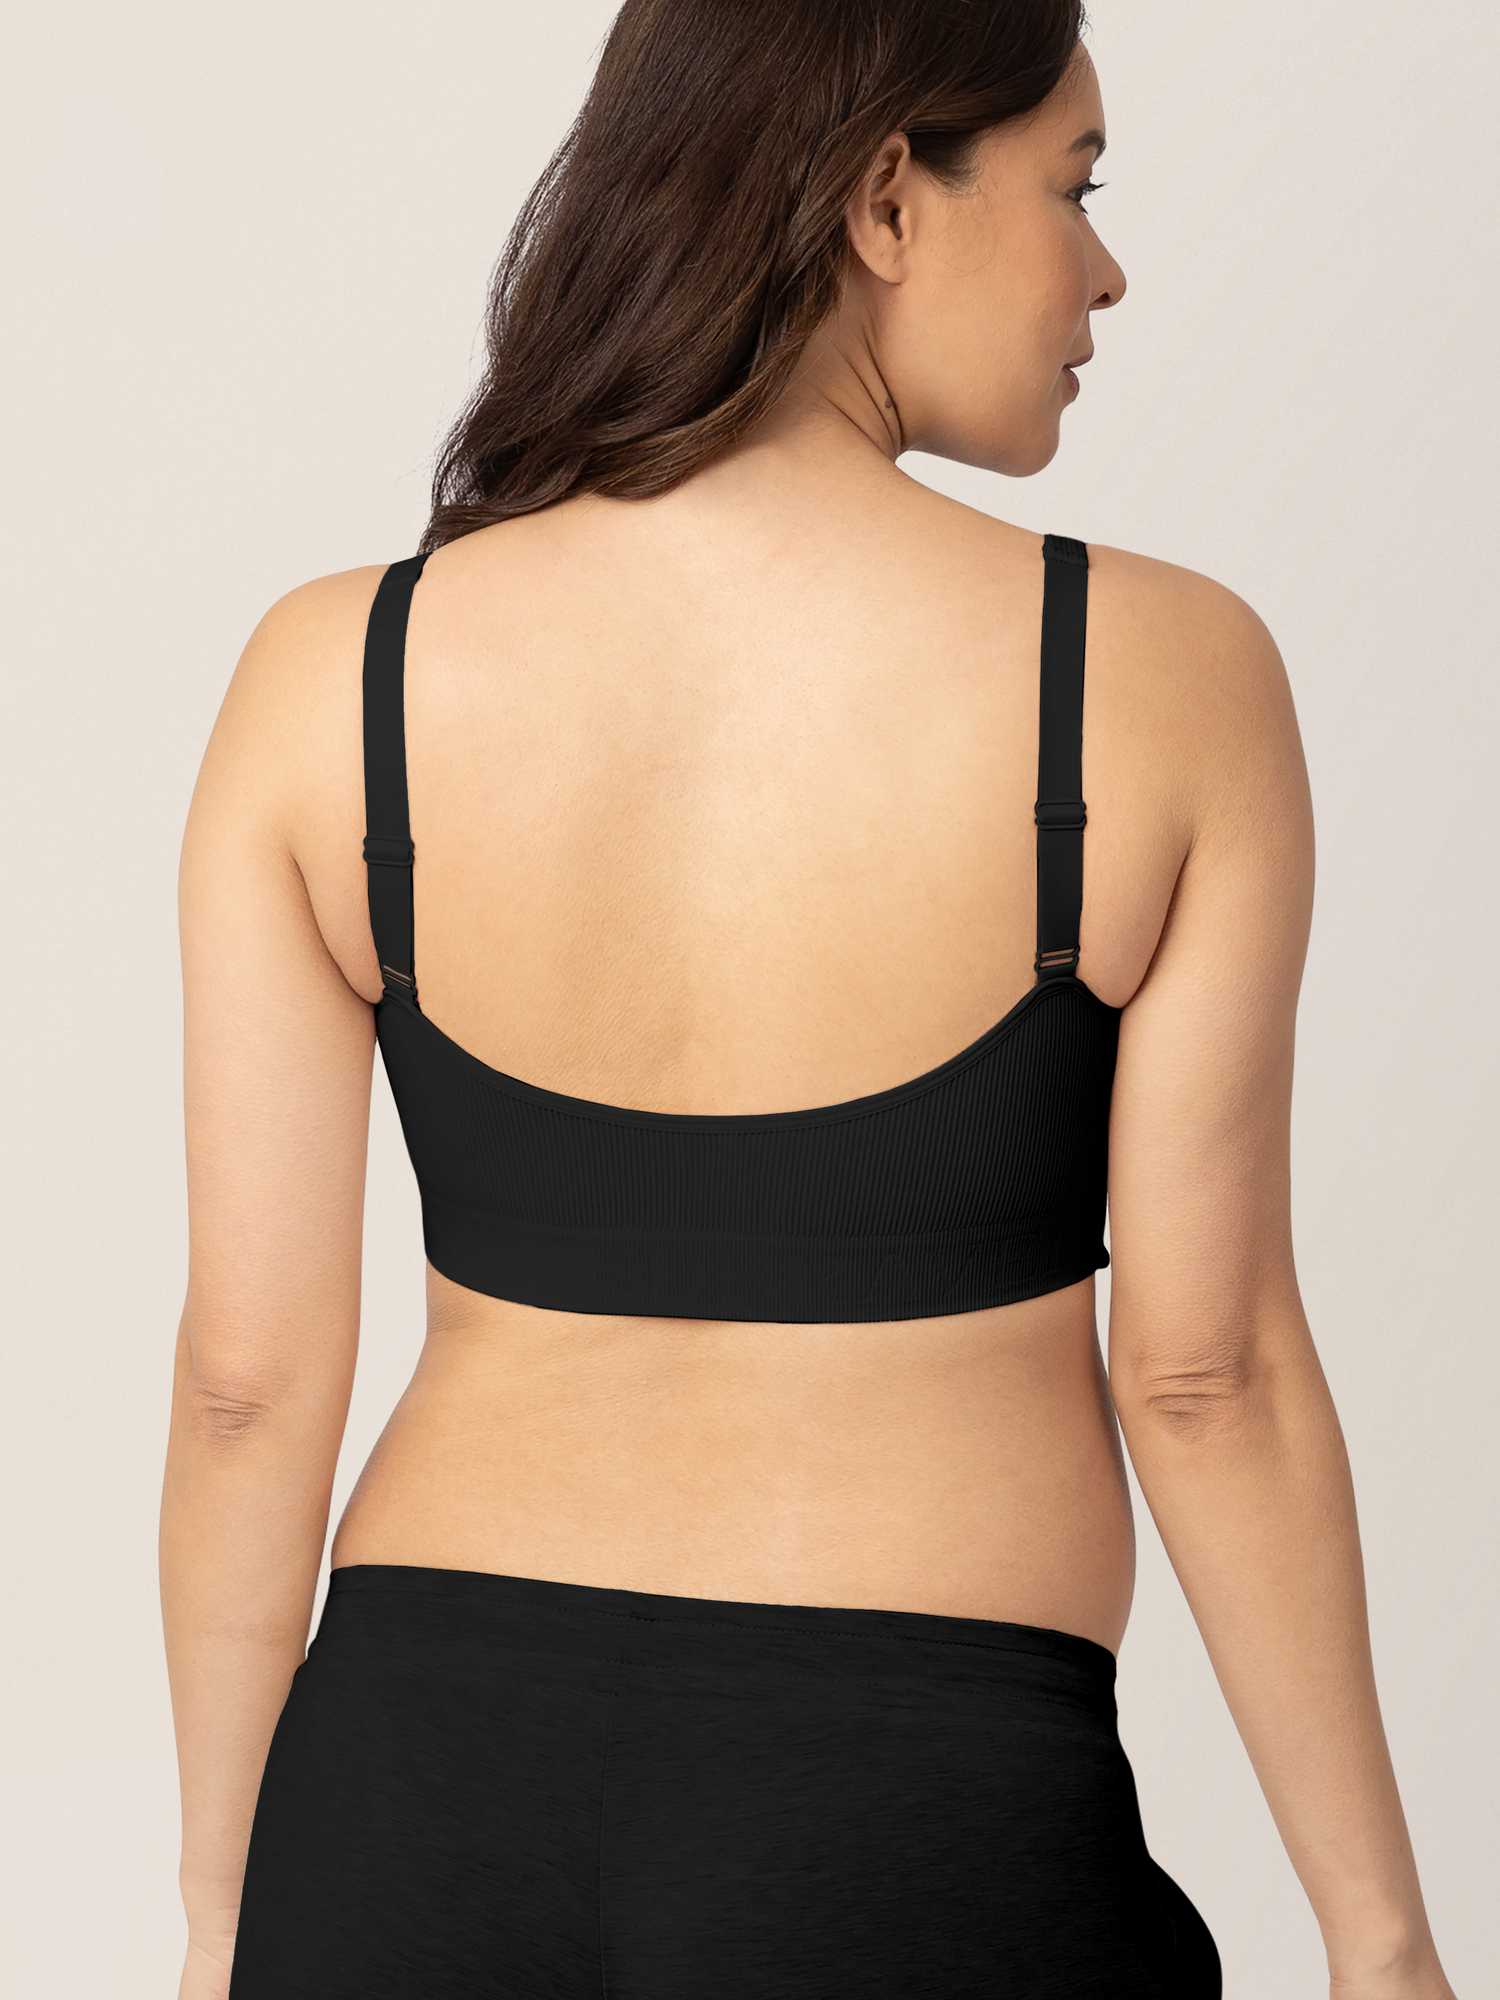 Back of a Pregnant model wearing the Sublime® Adjustable Crossover Nursing & Lounge Bra in Black.